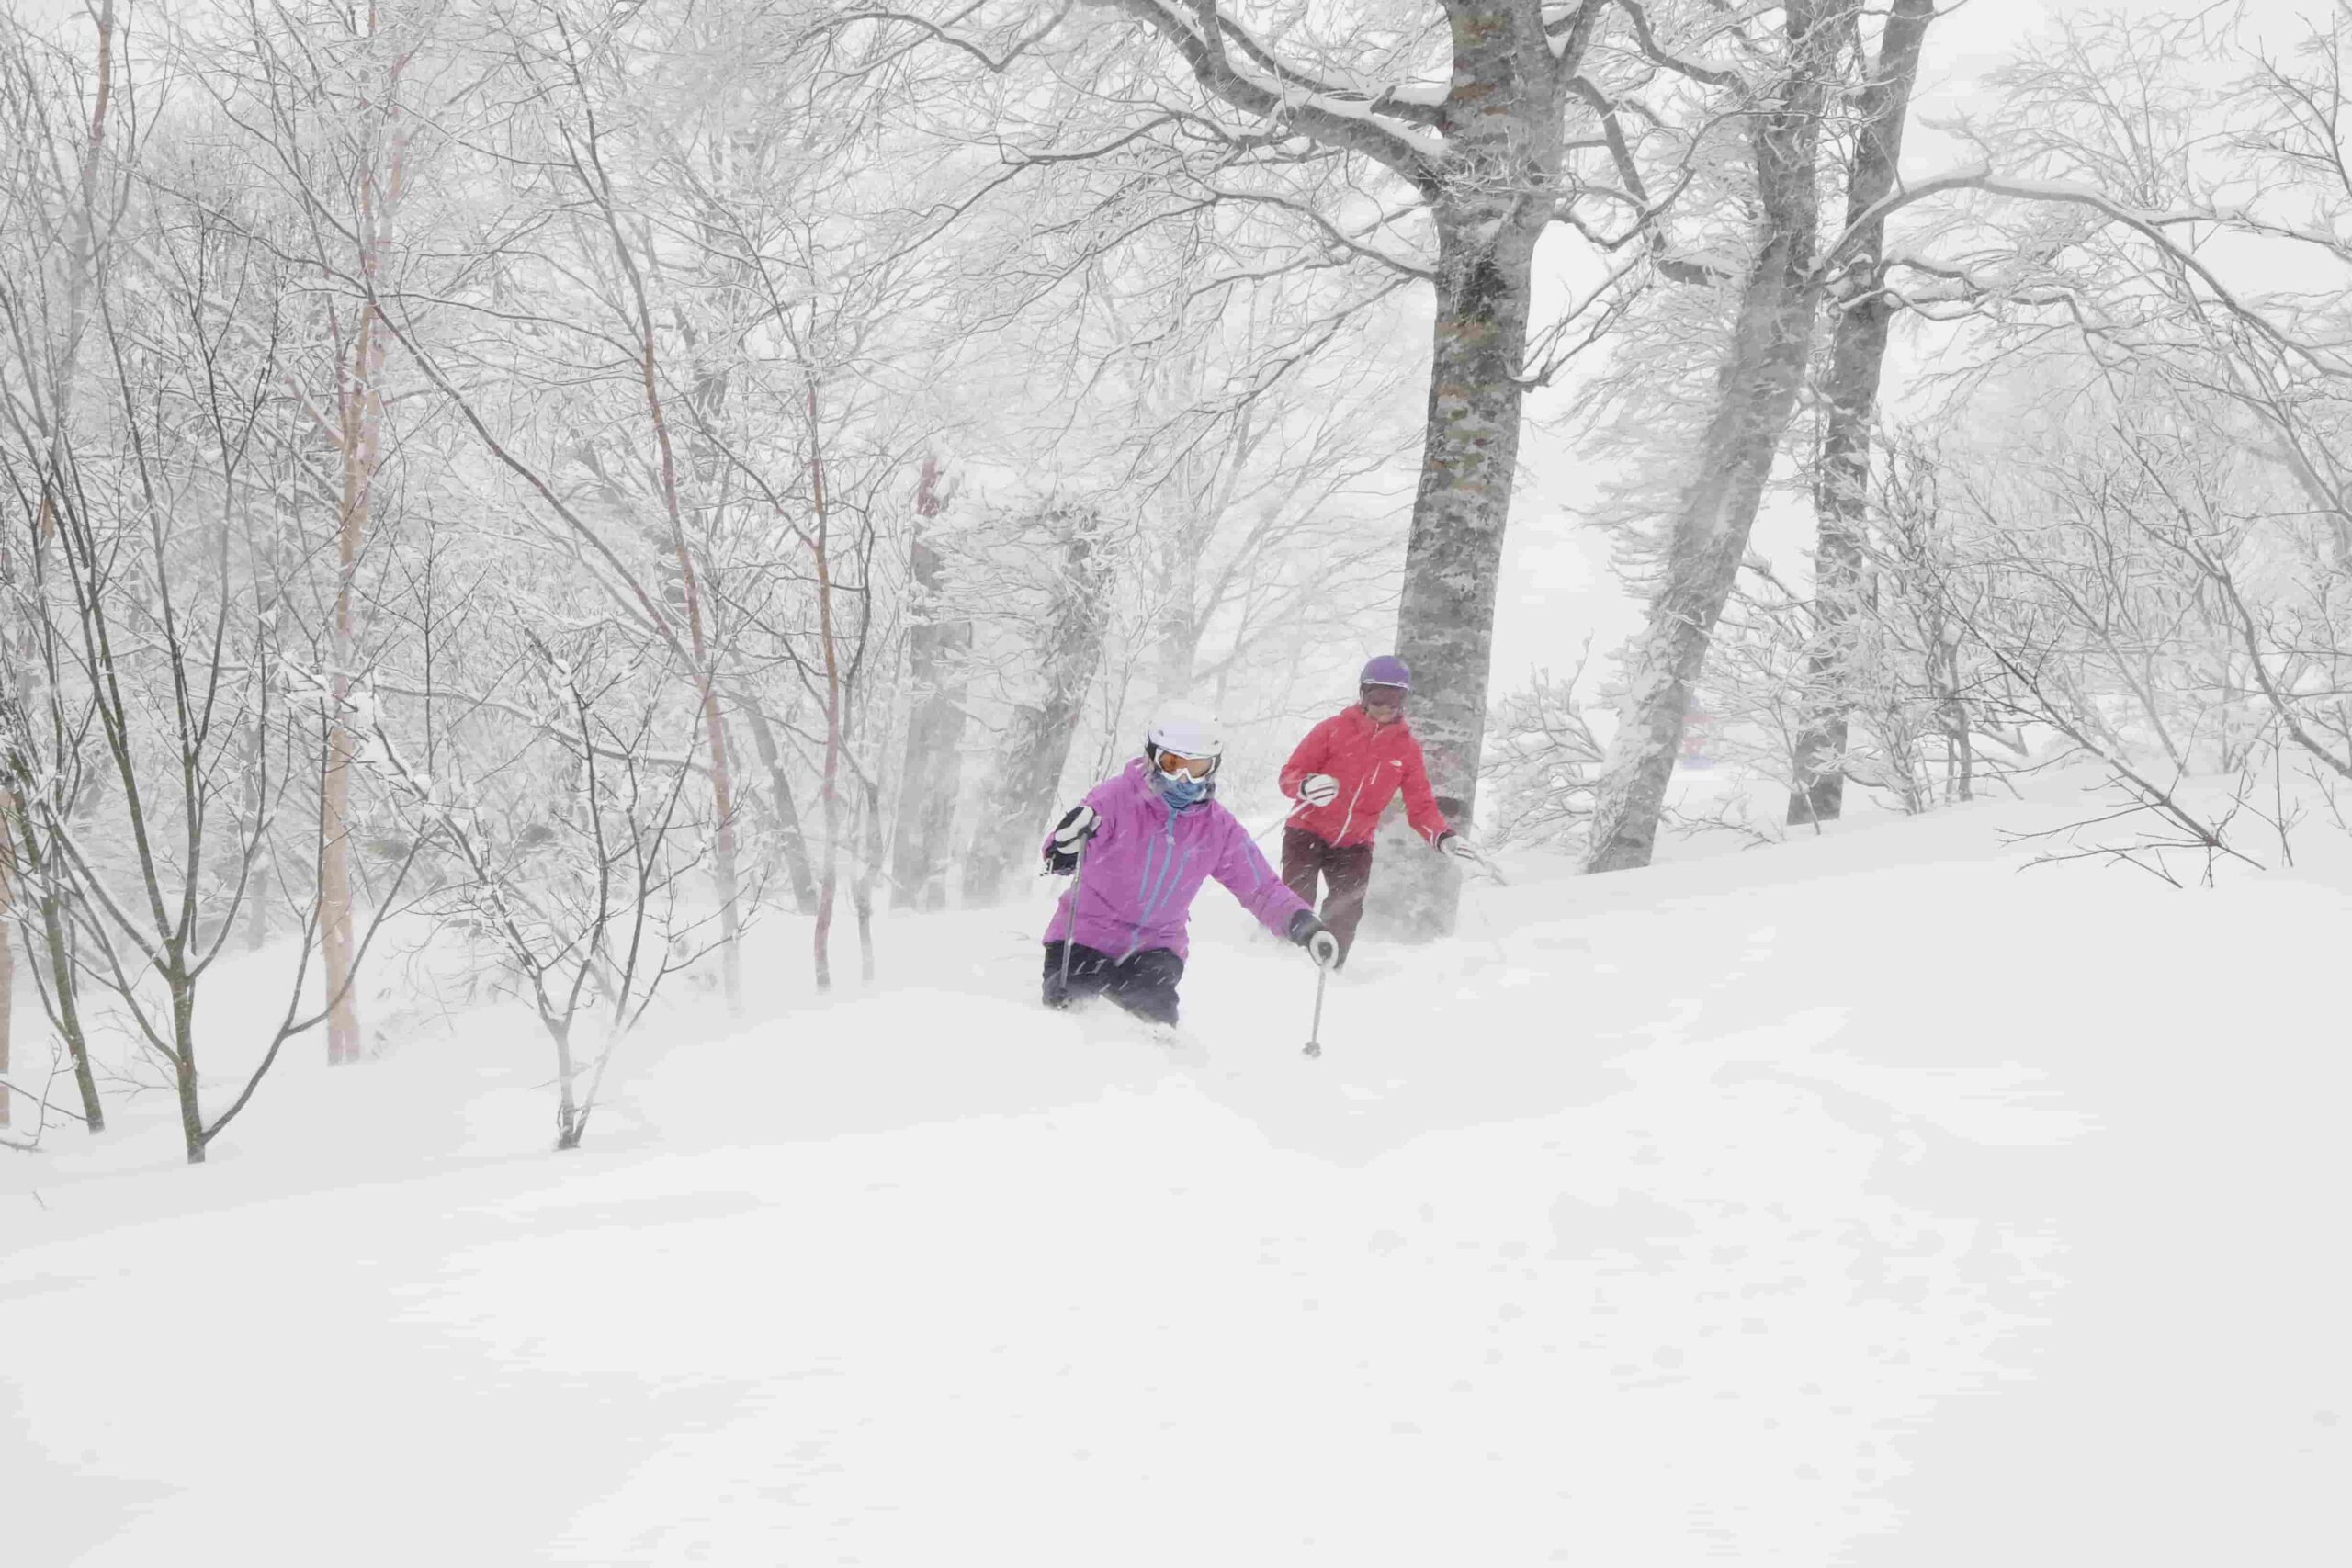 skiing powder in Japan